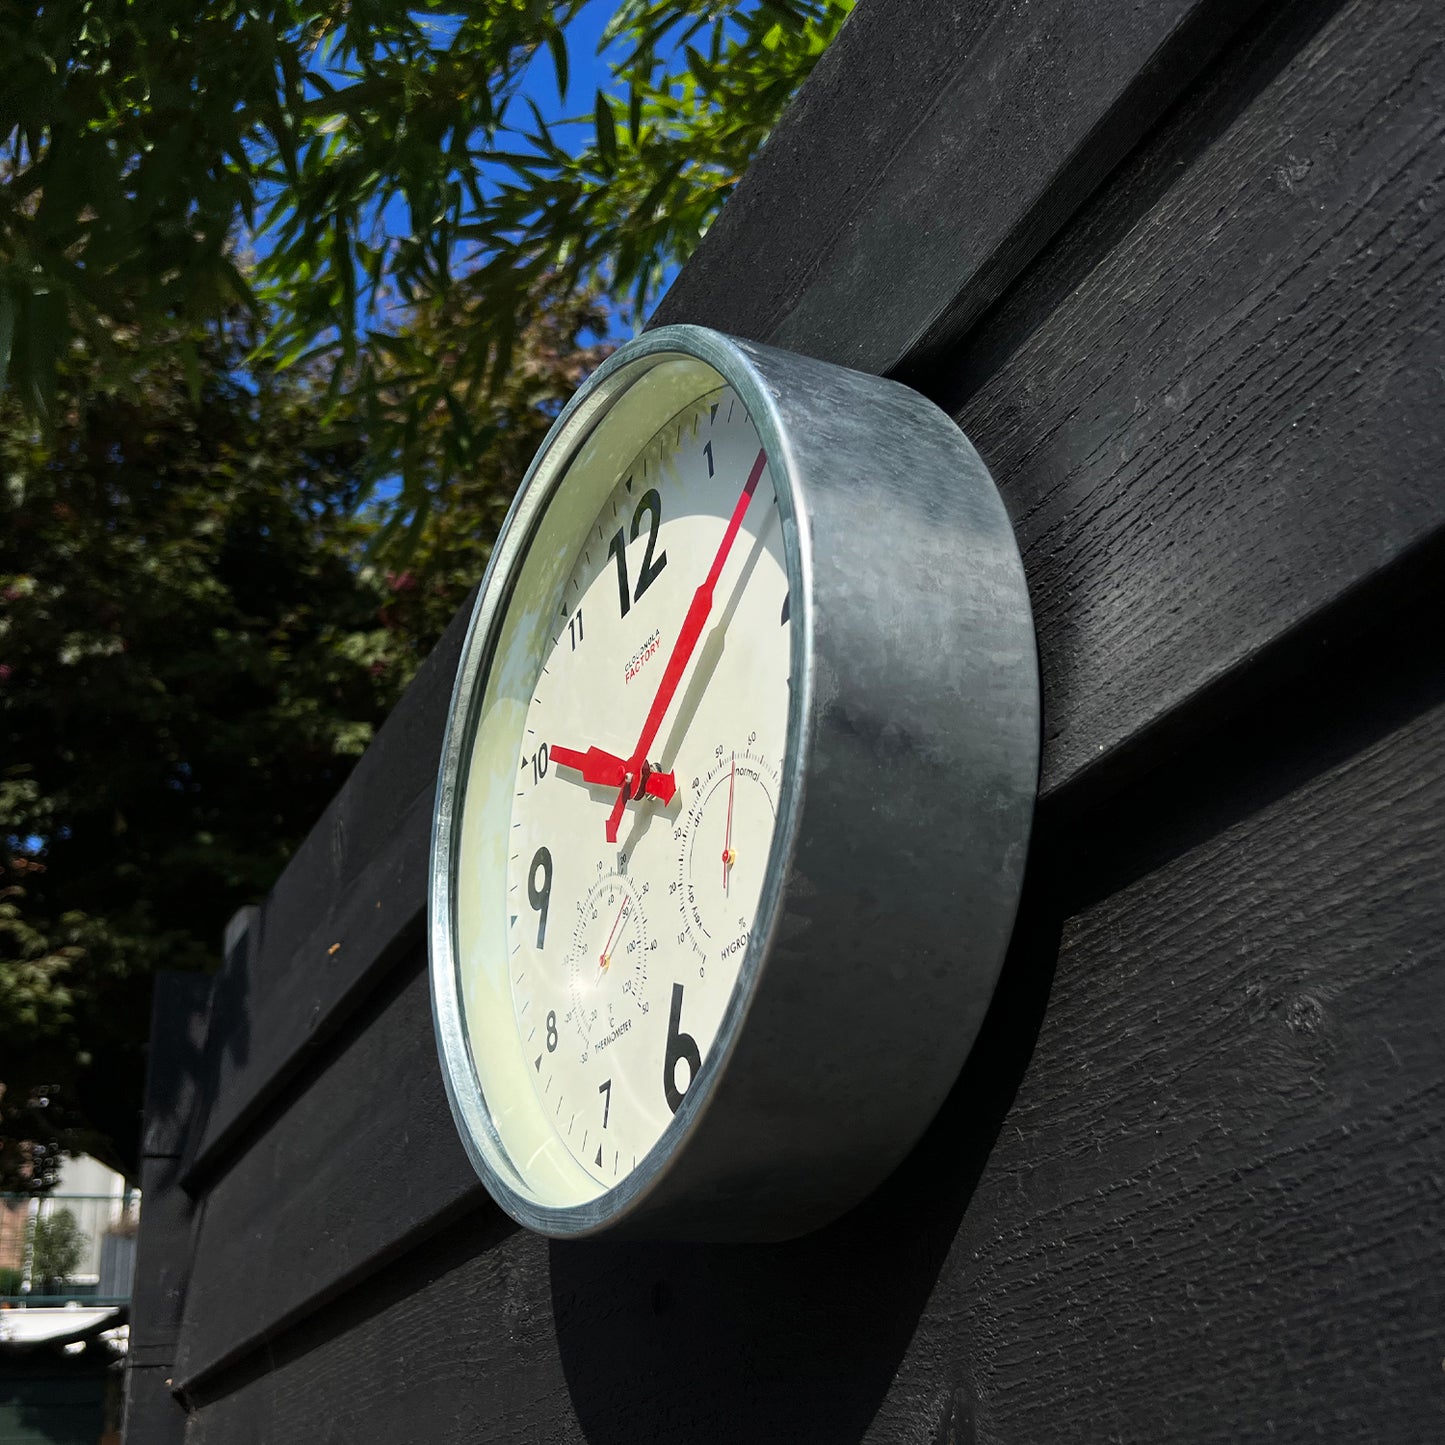 Factory Outdoor Zinc - Diameter 11.81 - Wall Clock - Weatherproof Station with Hygrometer & Temperature Readings